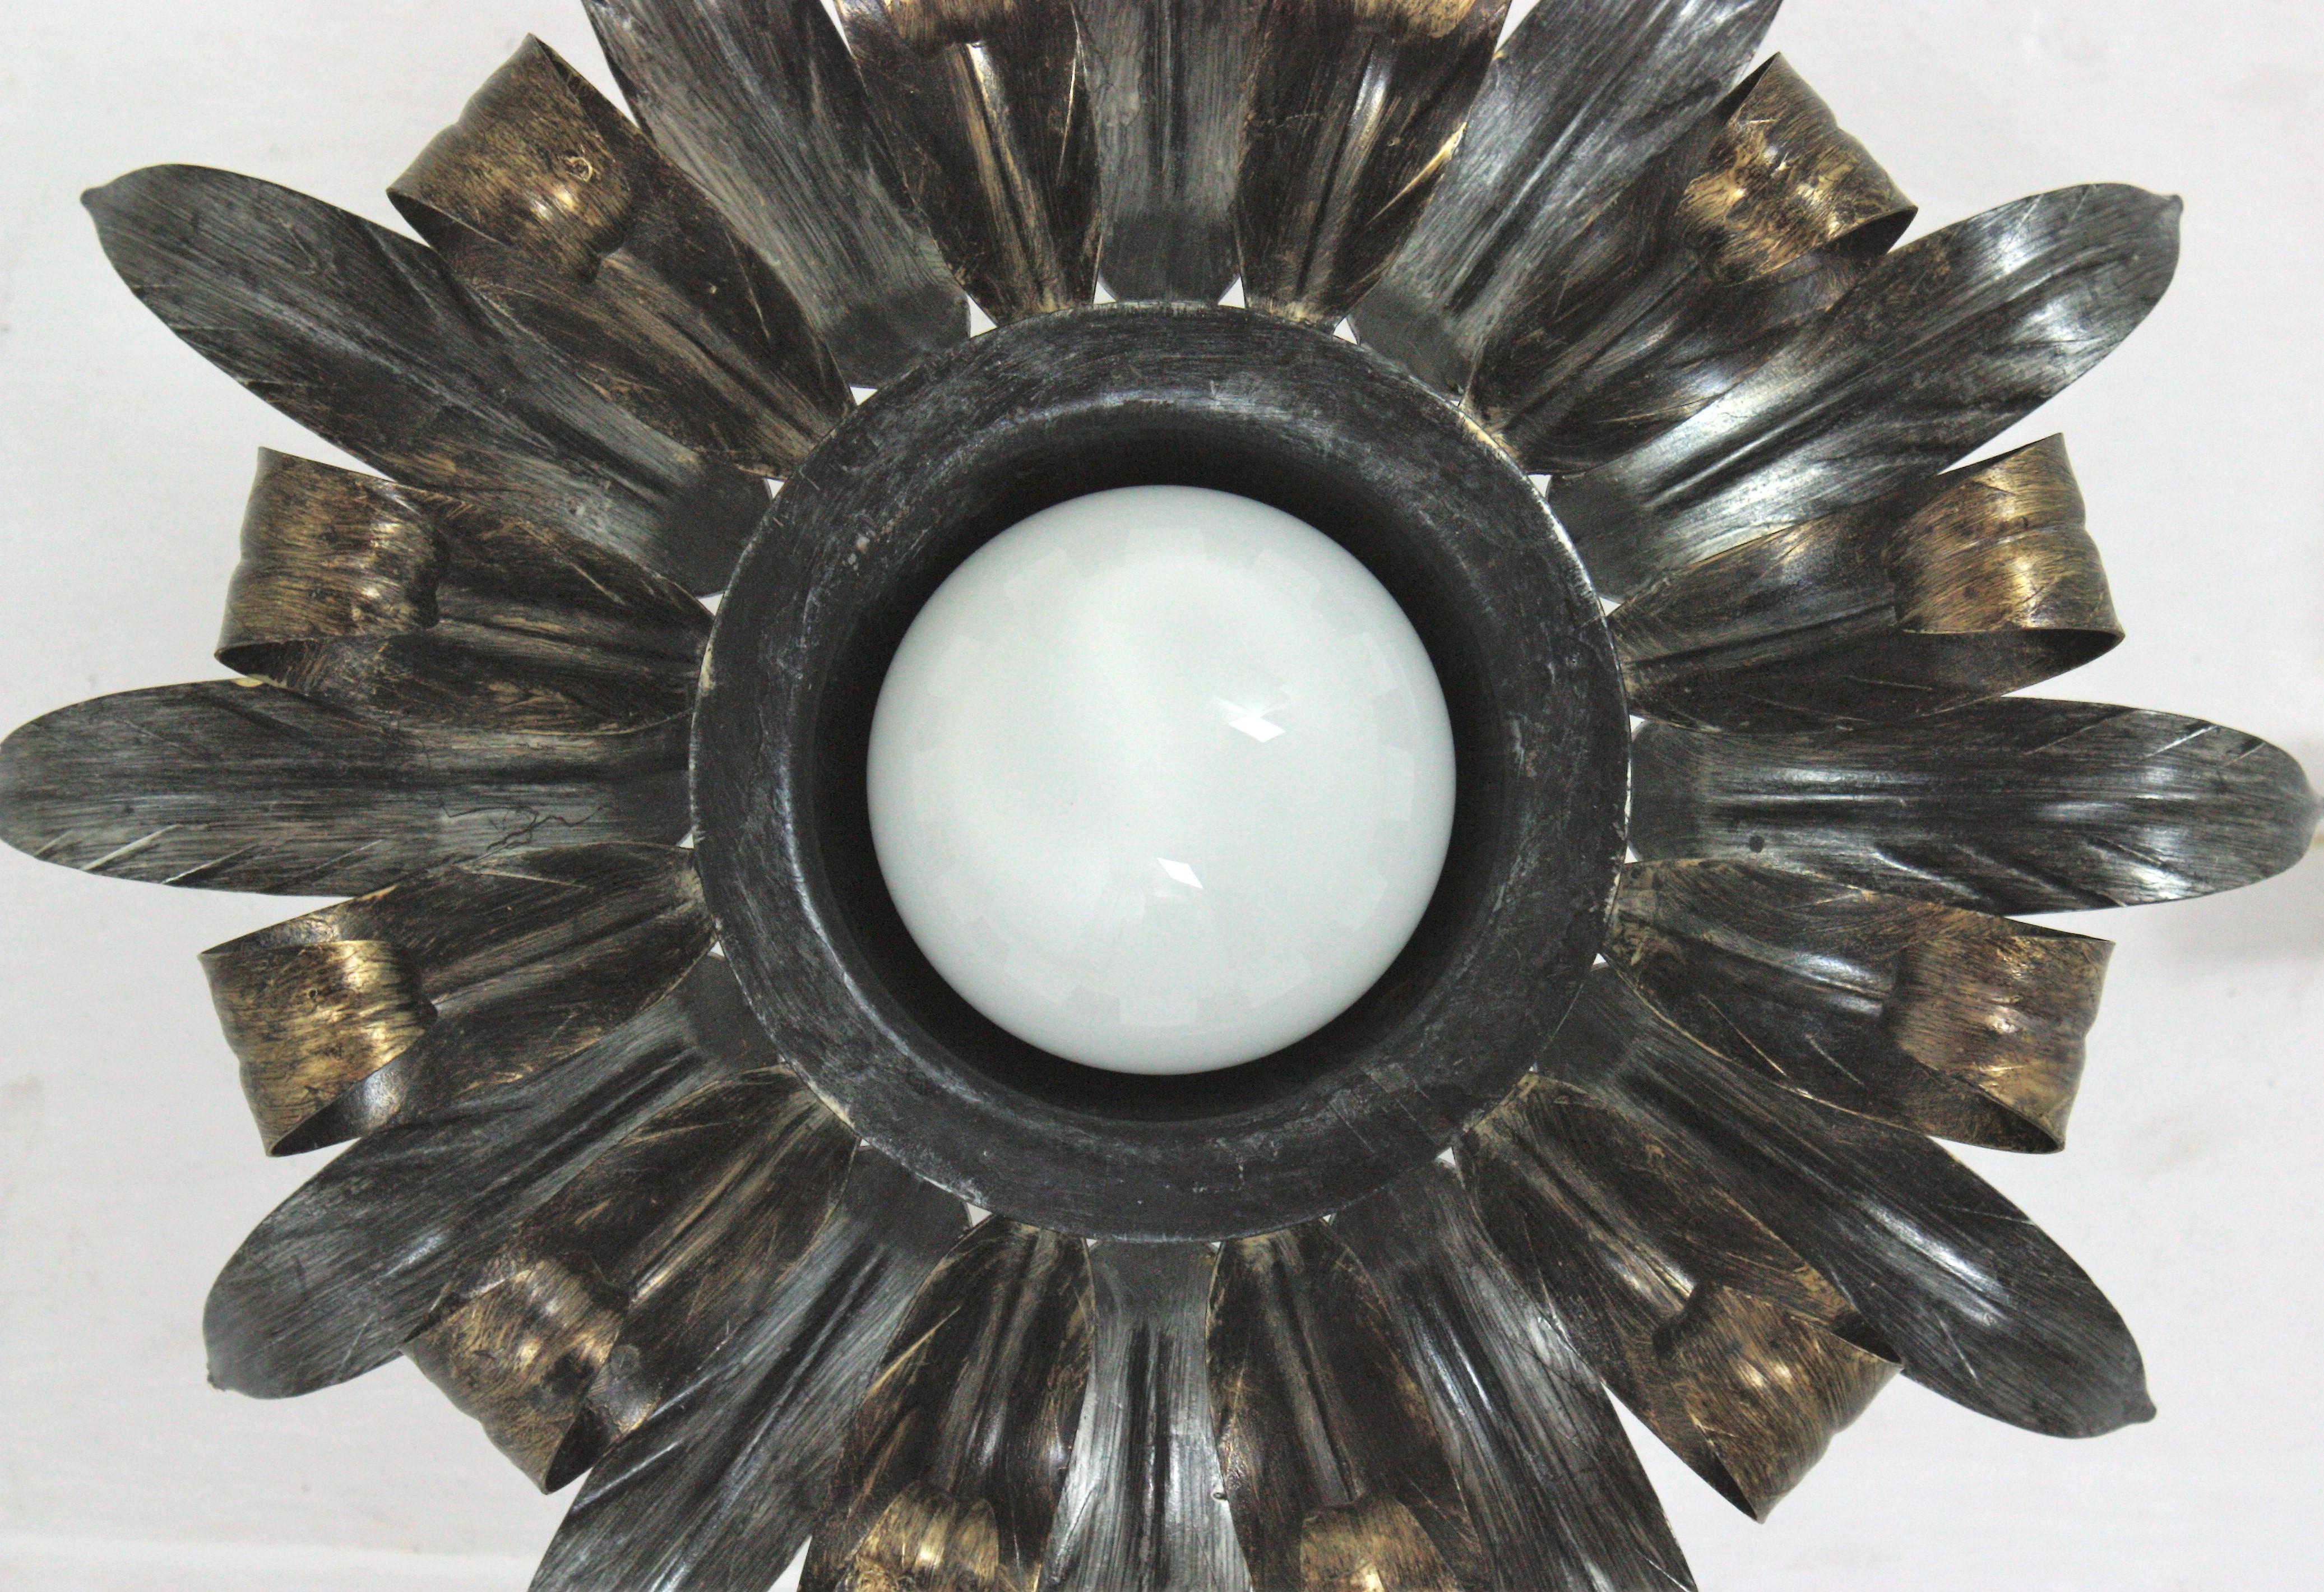 Sunburst Eyelash Flush Mount Light Fixture in Gilt Silvered Metal In Good Condition For Sale In Barcelona, ES